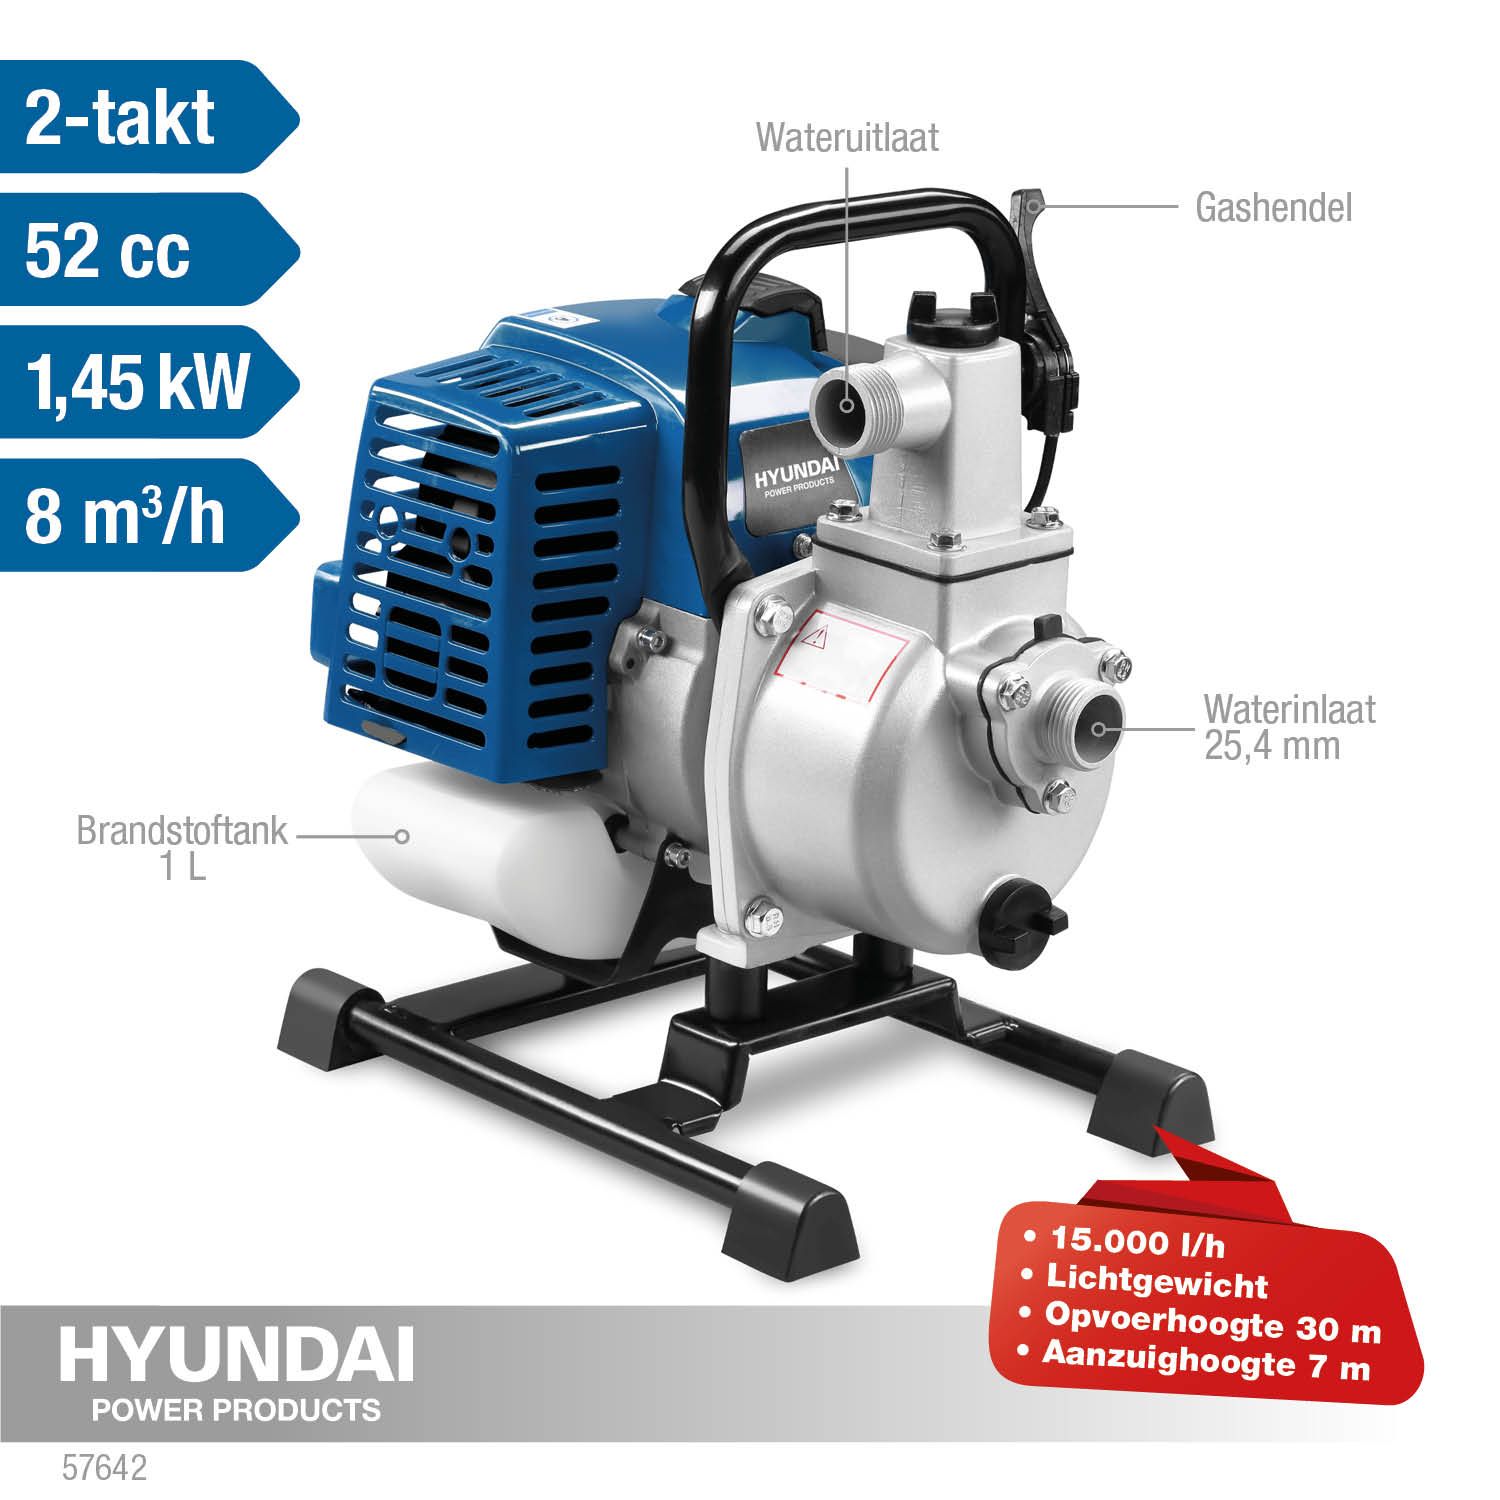 Hyundai waterpomp benzine 52 cc 